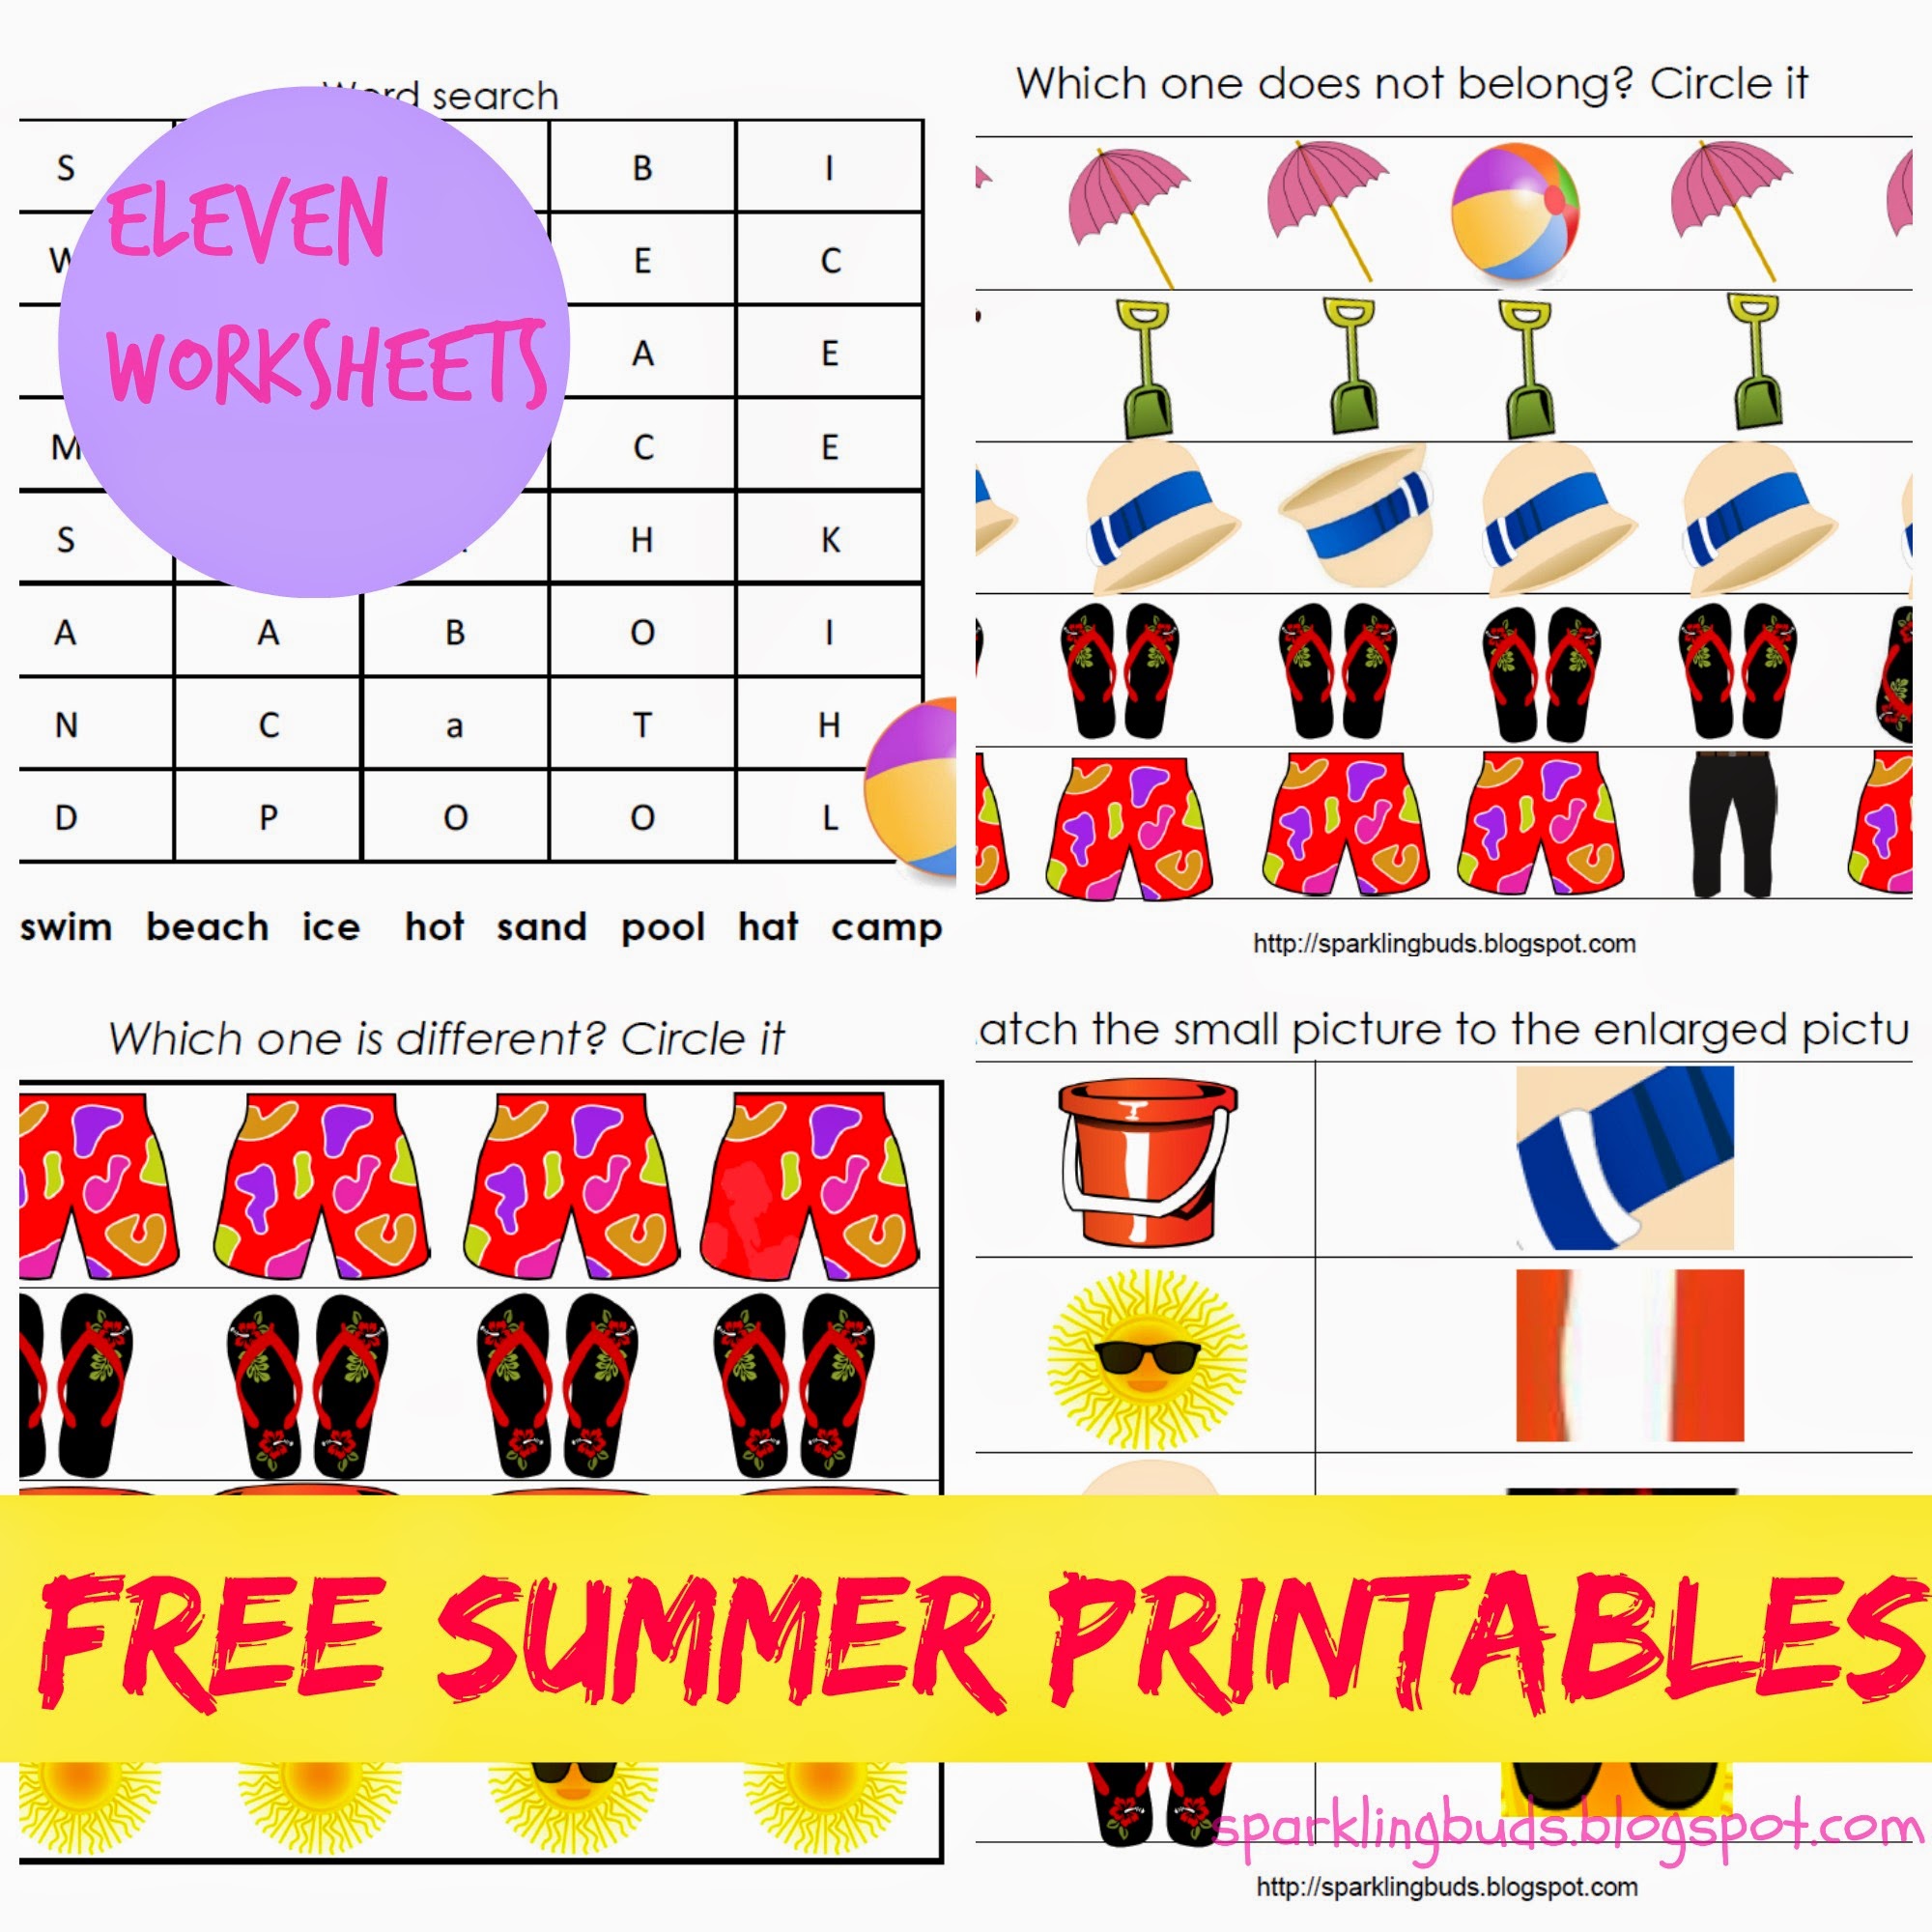 Free Summer printables sparklingbuds